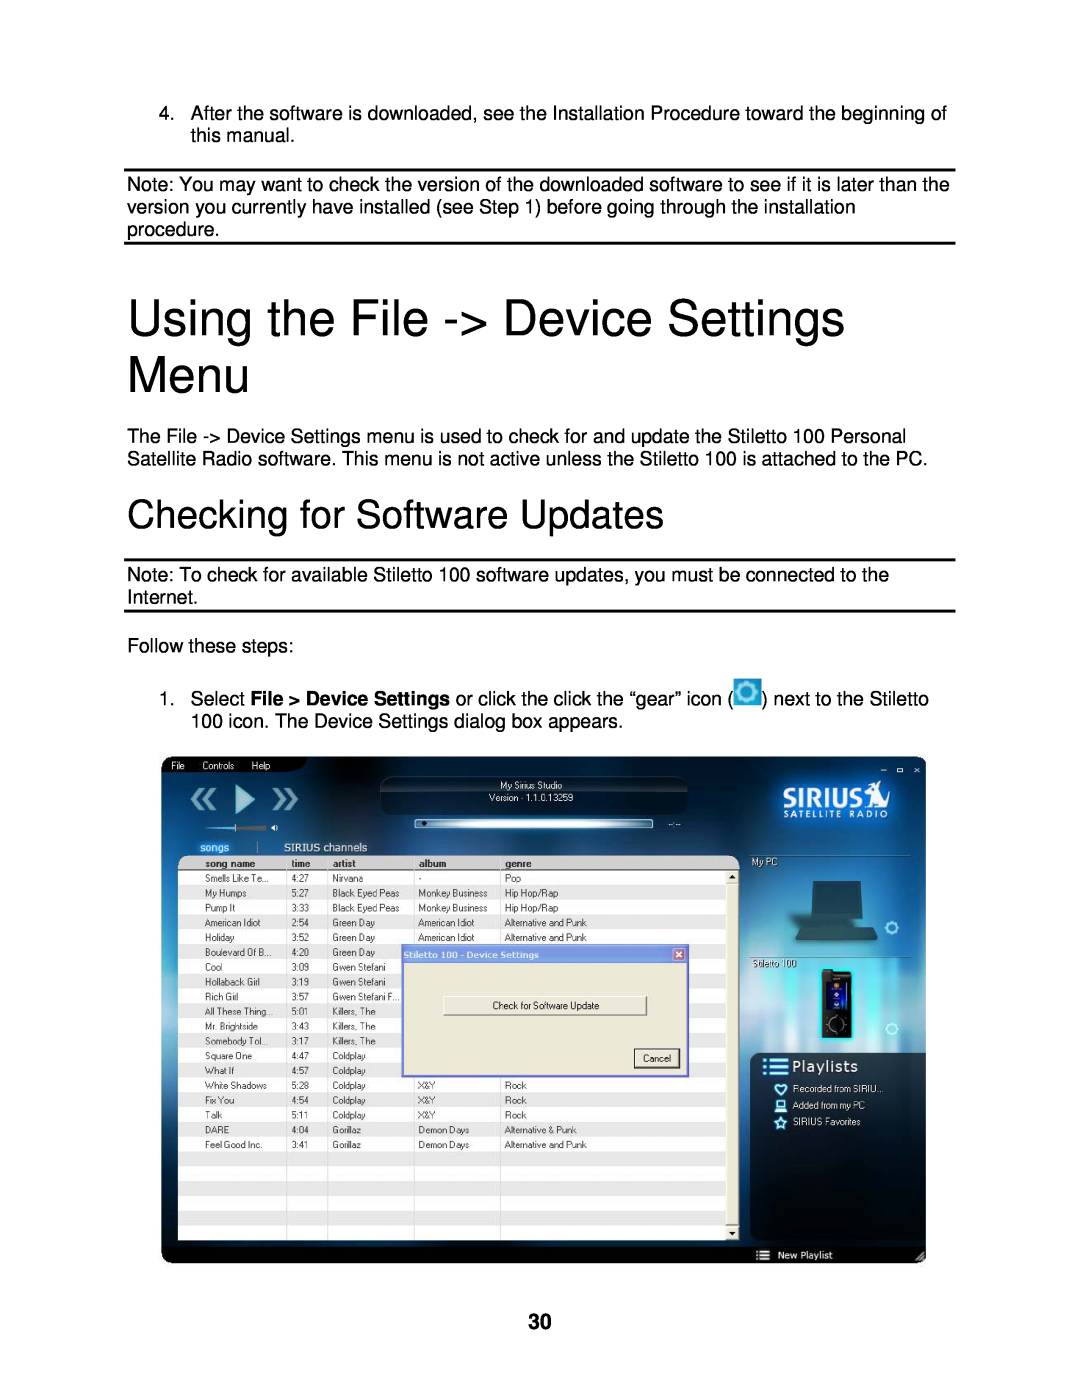 Sirius Satellite Radio 100 manual Using the File ->Device Settings Menu, Checking for Software Updates 